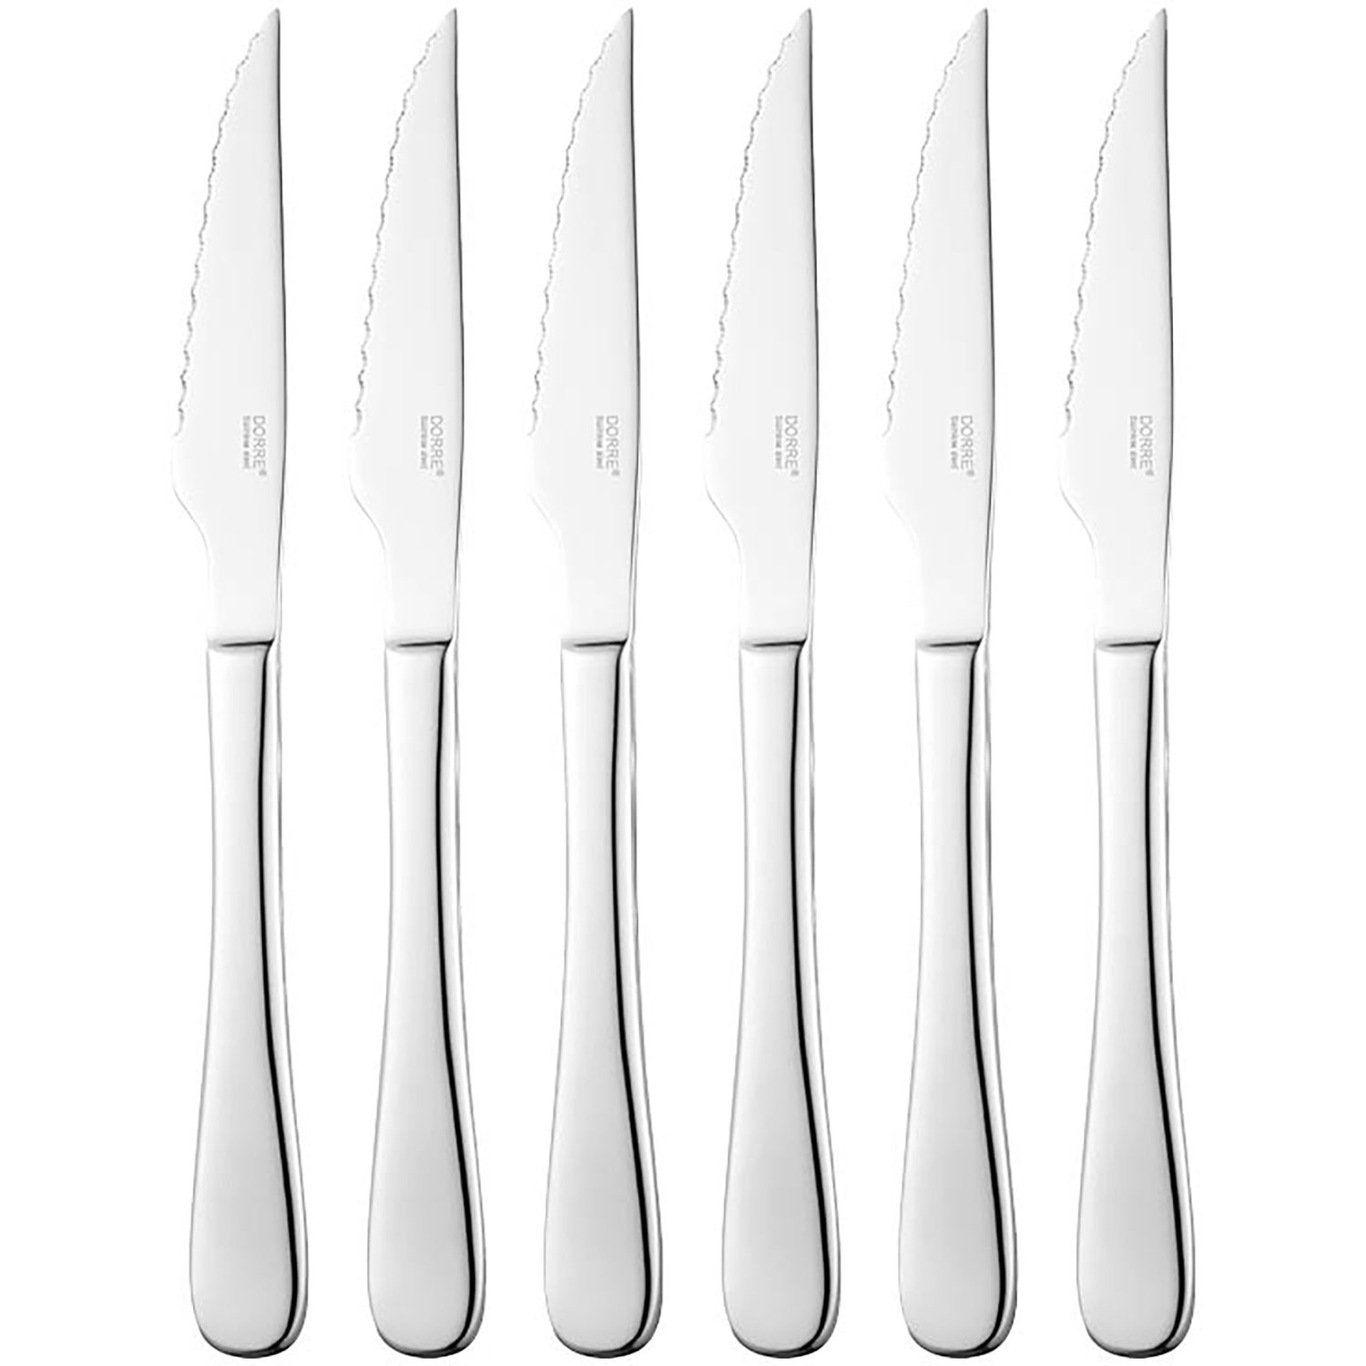 https://royaldesign.com/image/2/dorre-classic-steak-knives-6-pack-0?w=800&quality=80